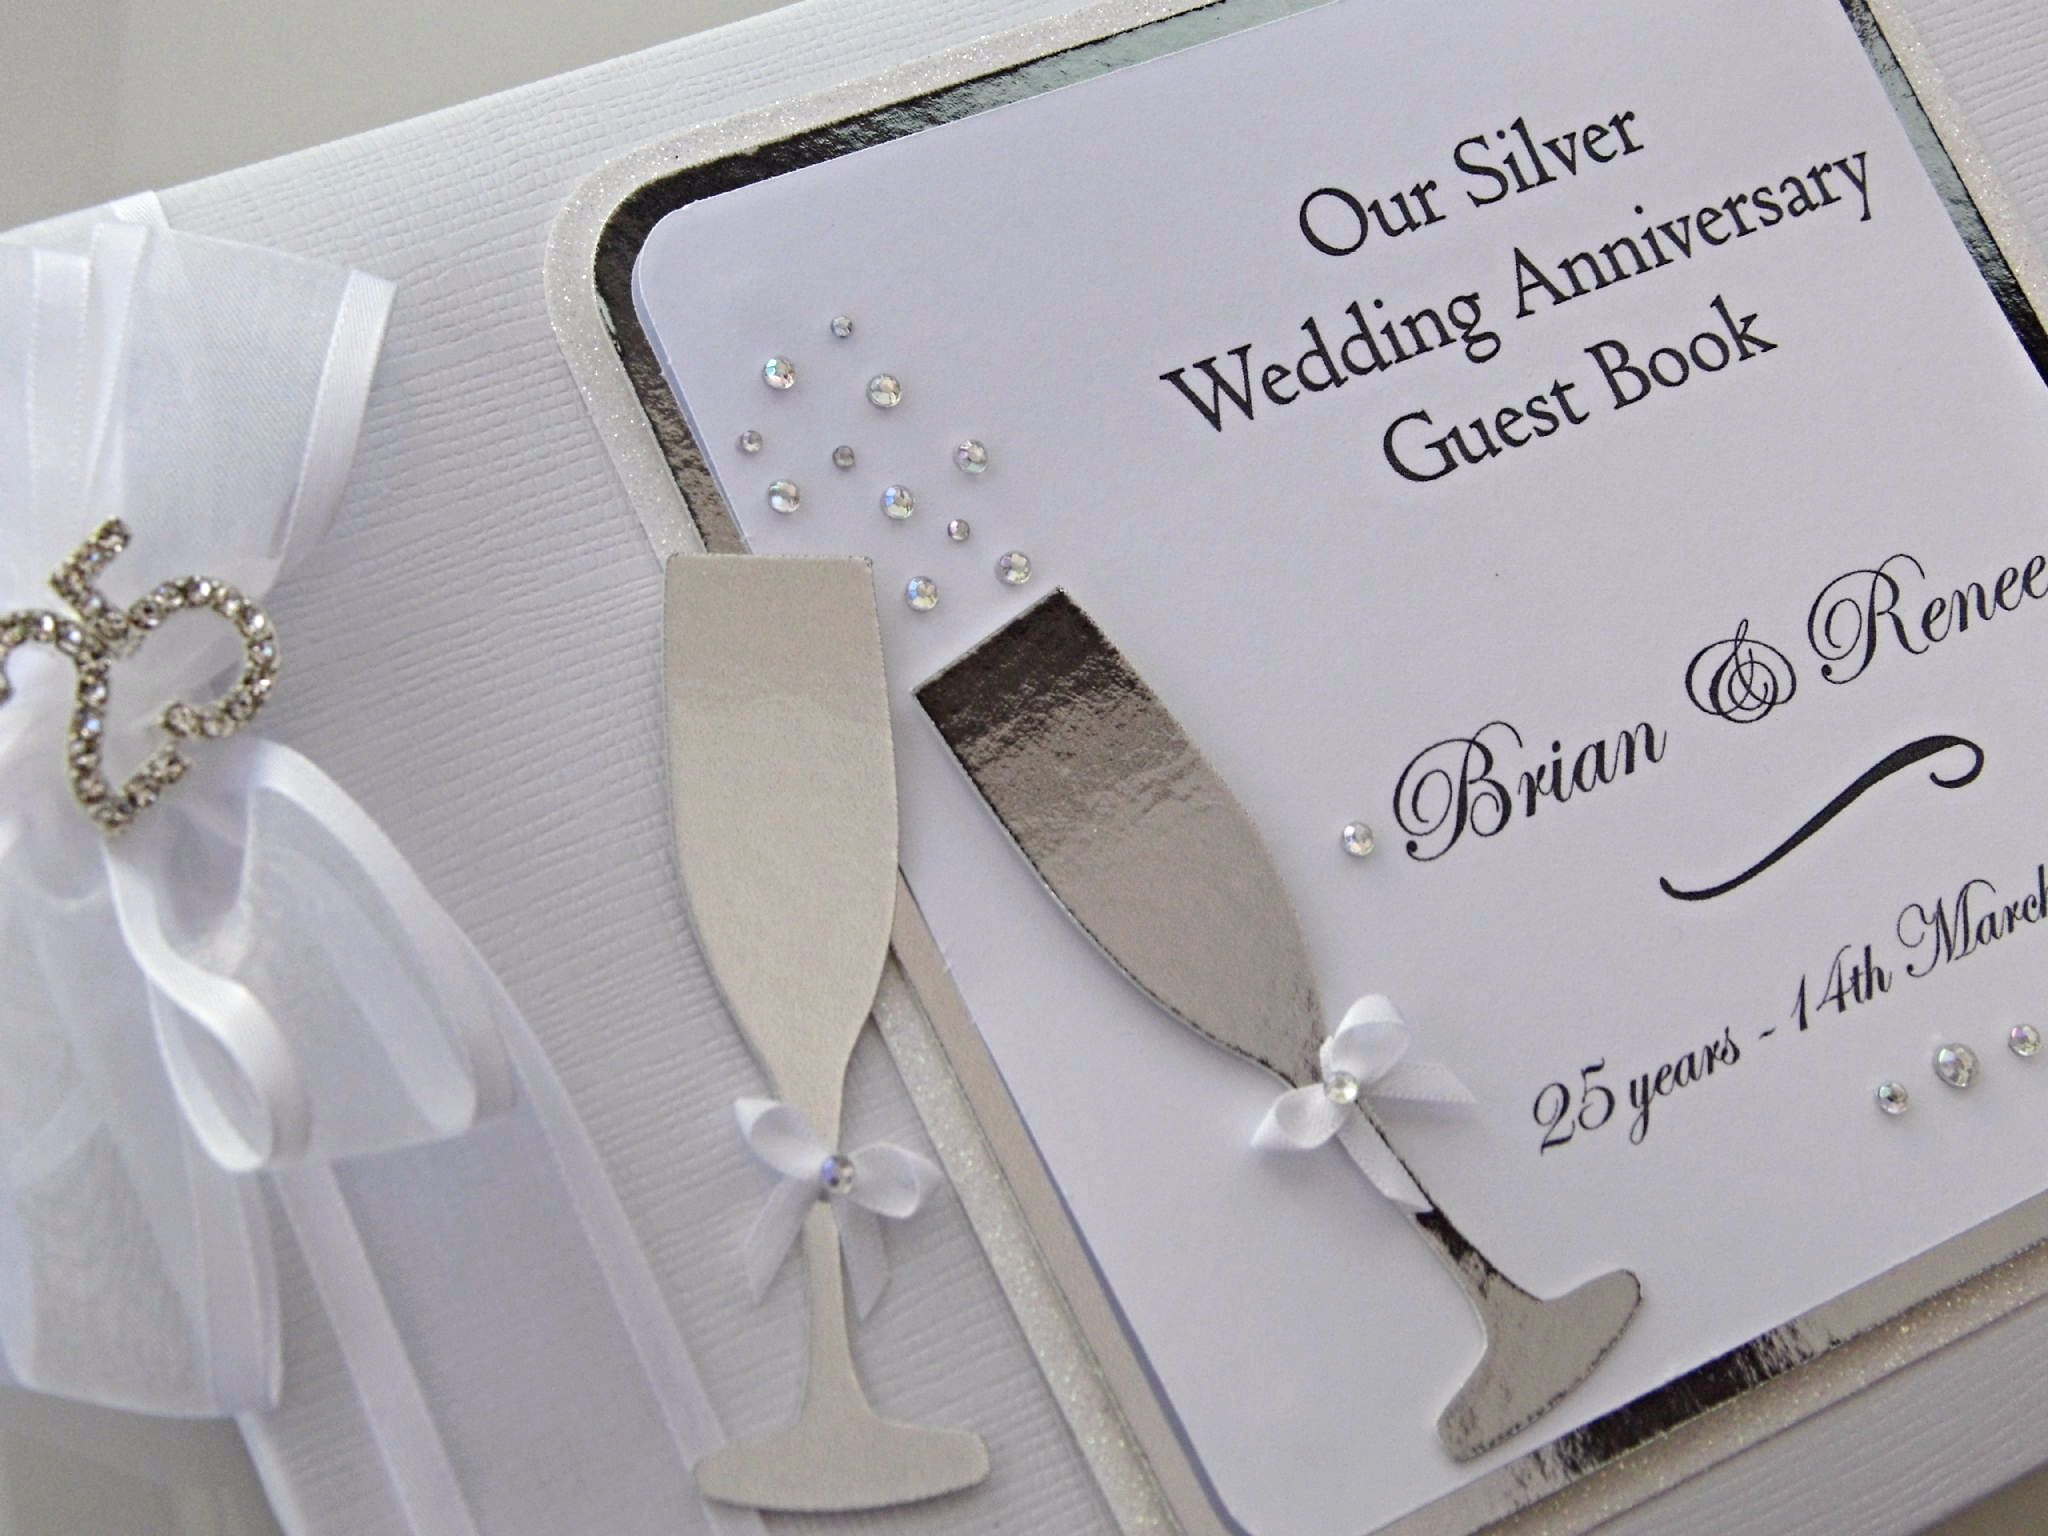 25th Wedding Anniversary Guest Book
 Silver Wedding Anniversary Guest Book Personalised